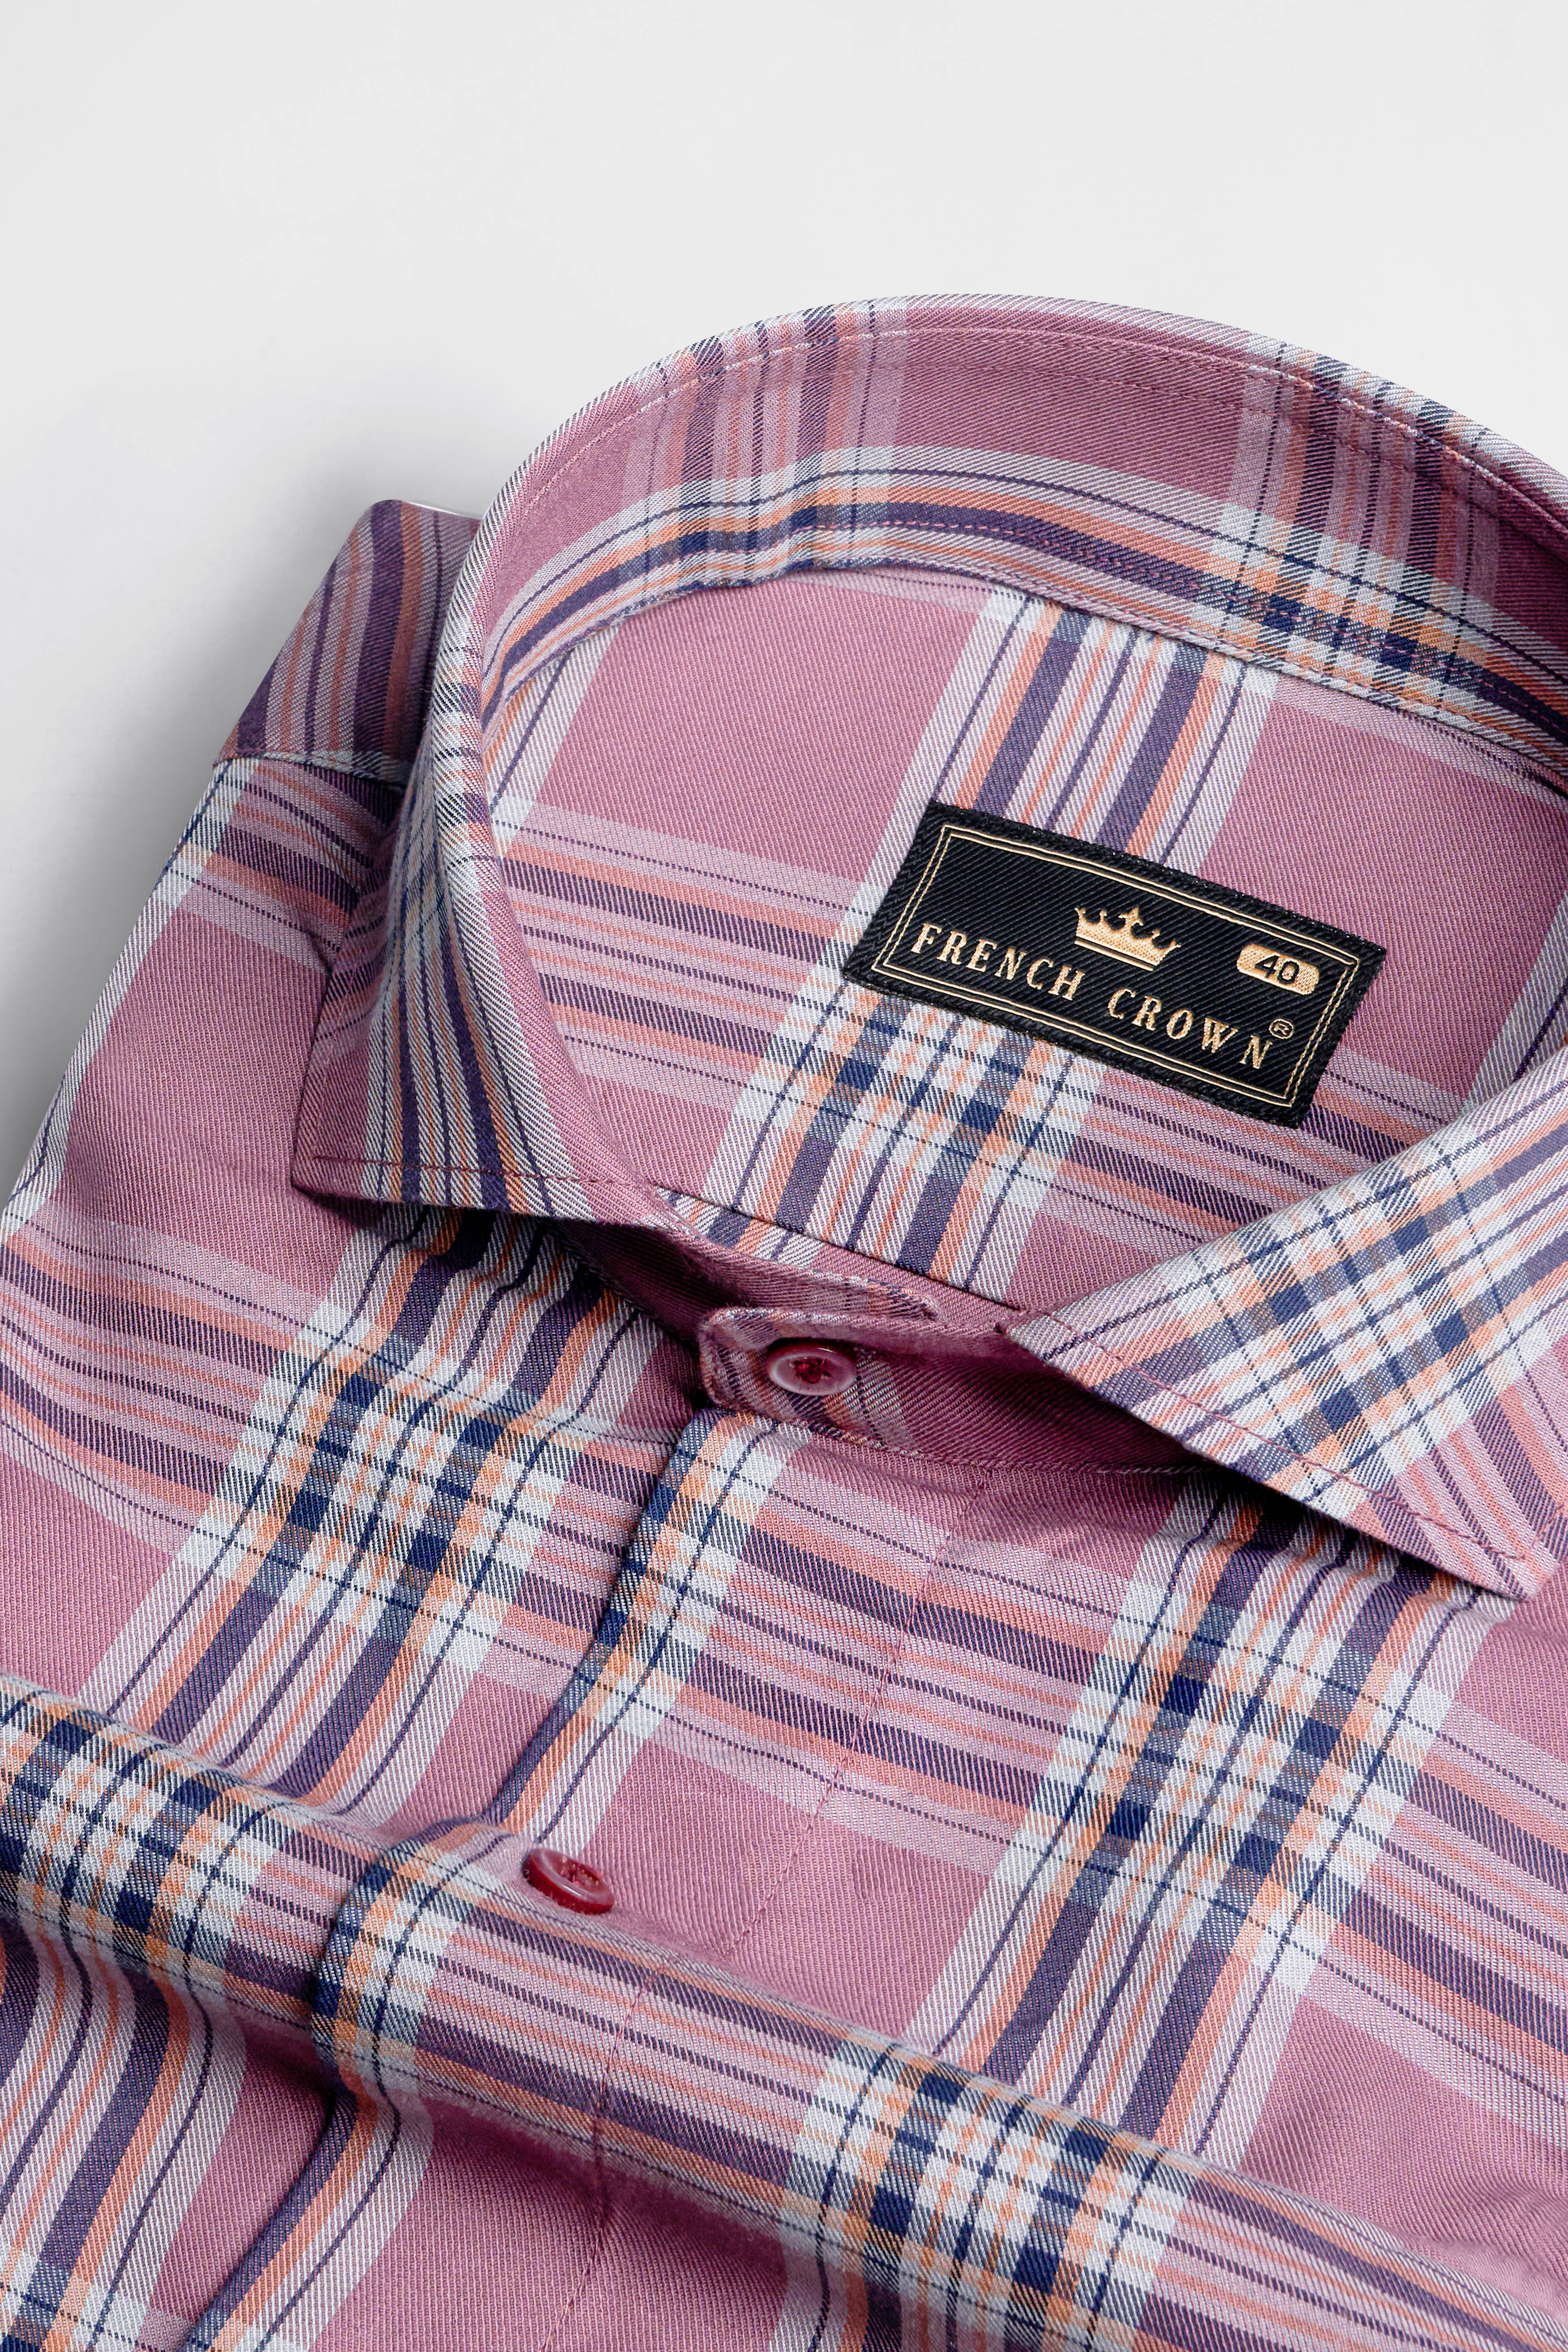 Turkish Rose Pink and Rhino Blue Twill Plaid Premium Cotton Shirt